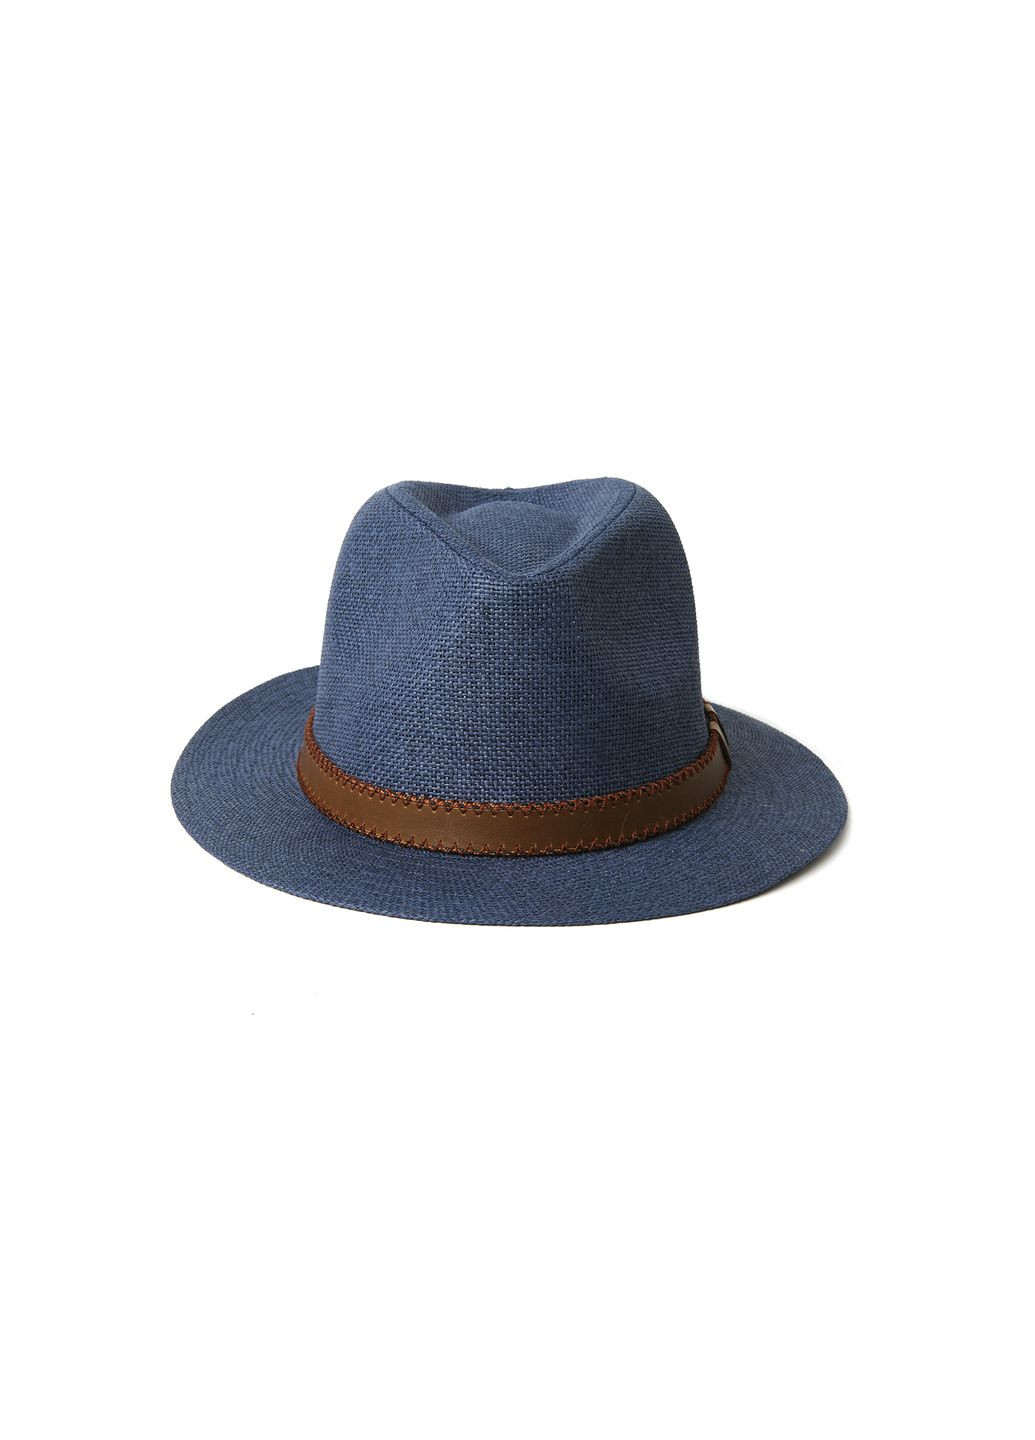 Шляпа федора мужская бумага синяя BATTY 817-693 LuckyLOOK 817-693m (289359816)